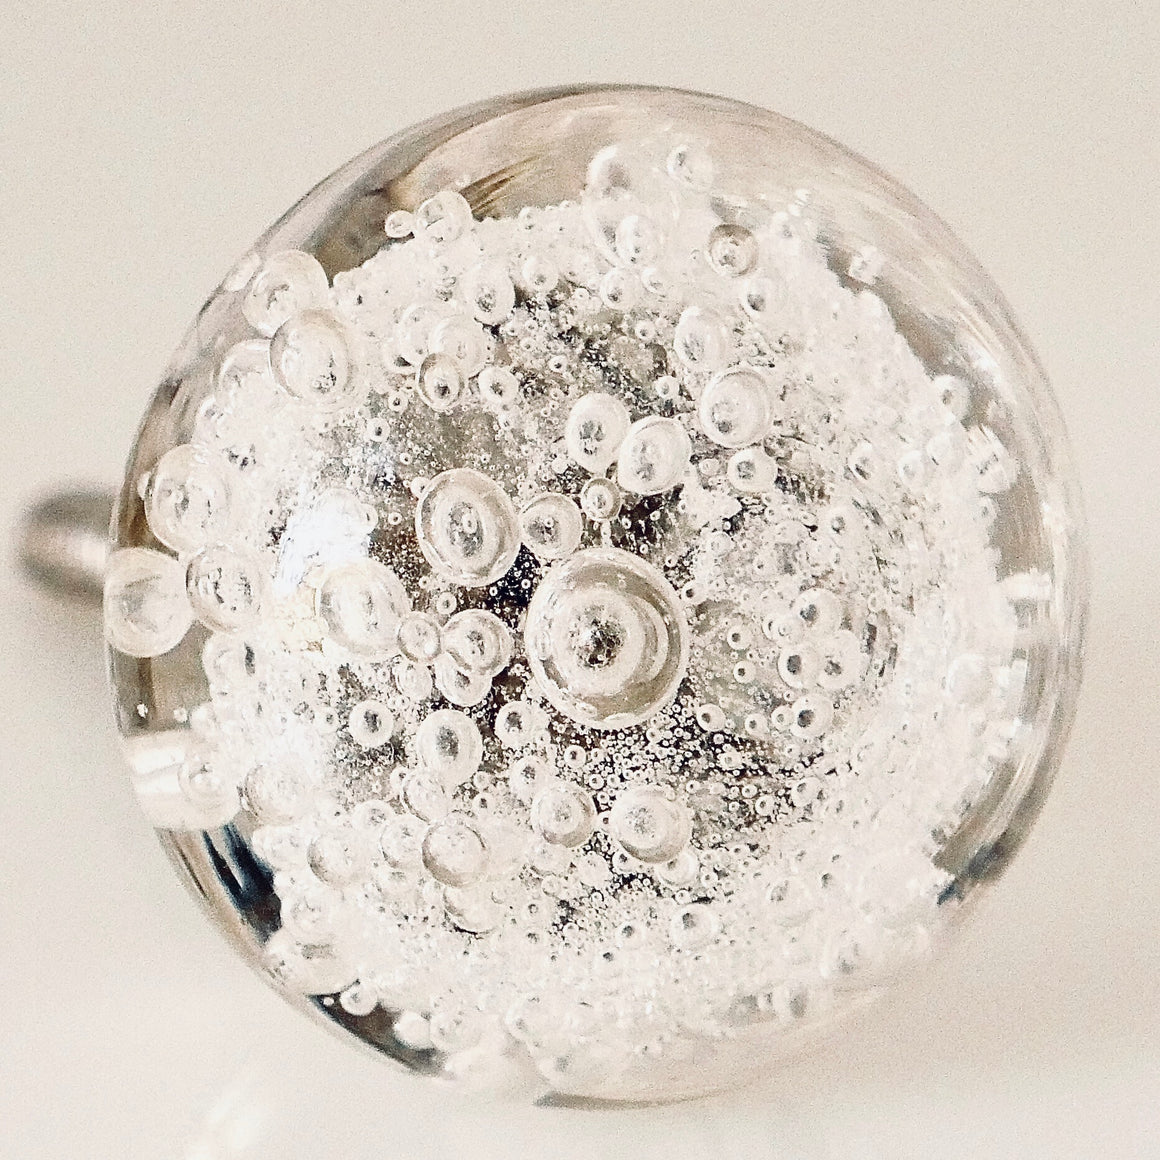 Bubble Glass CLEAR Knob